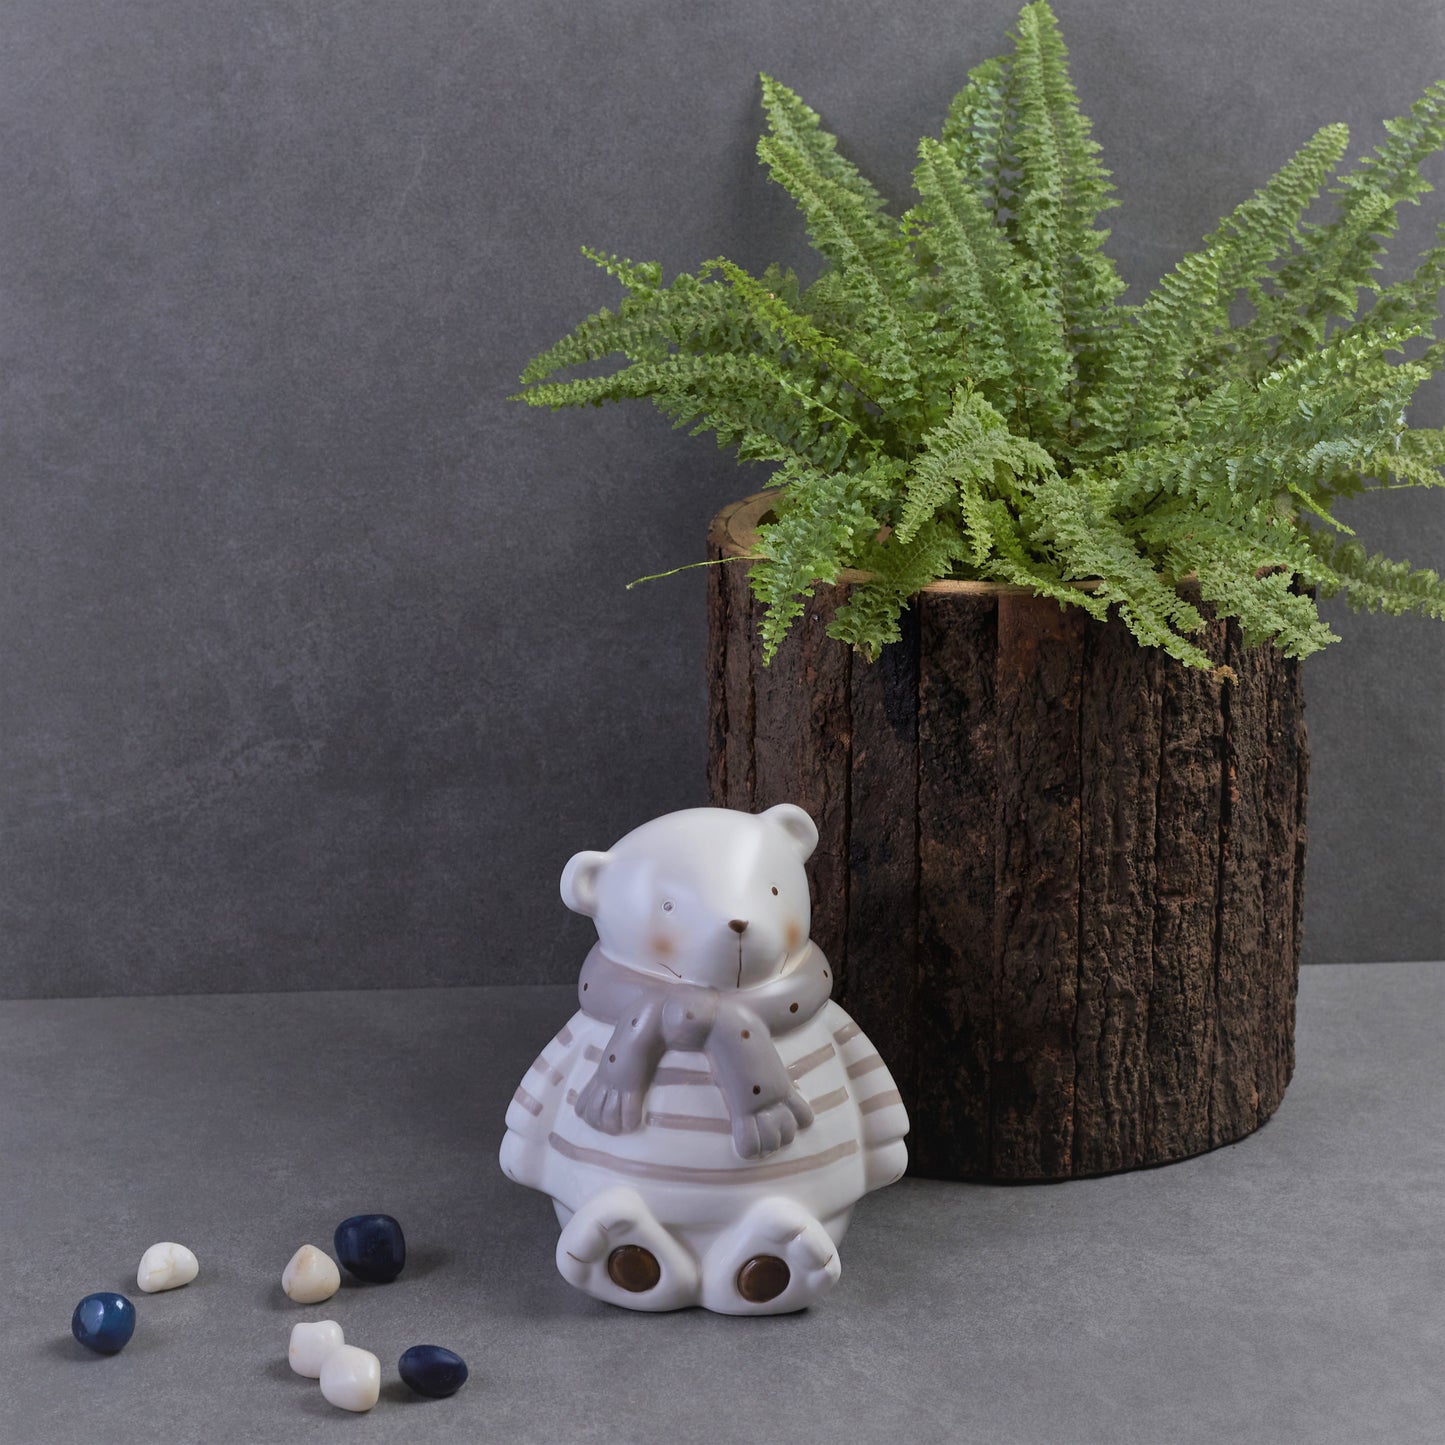 Cute Ceramic Teddy Bear Piggy Bank